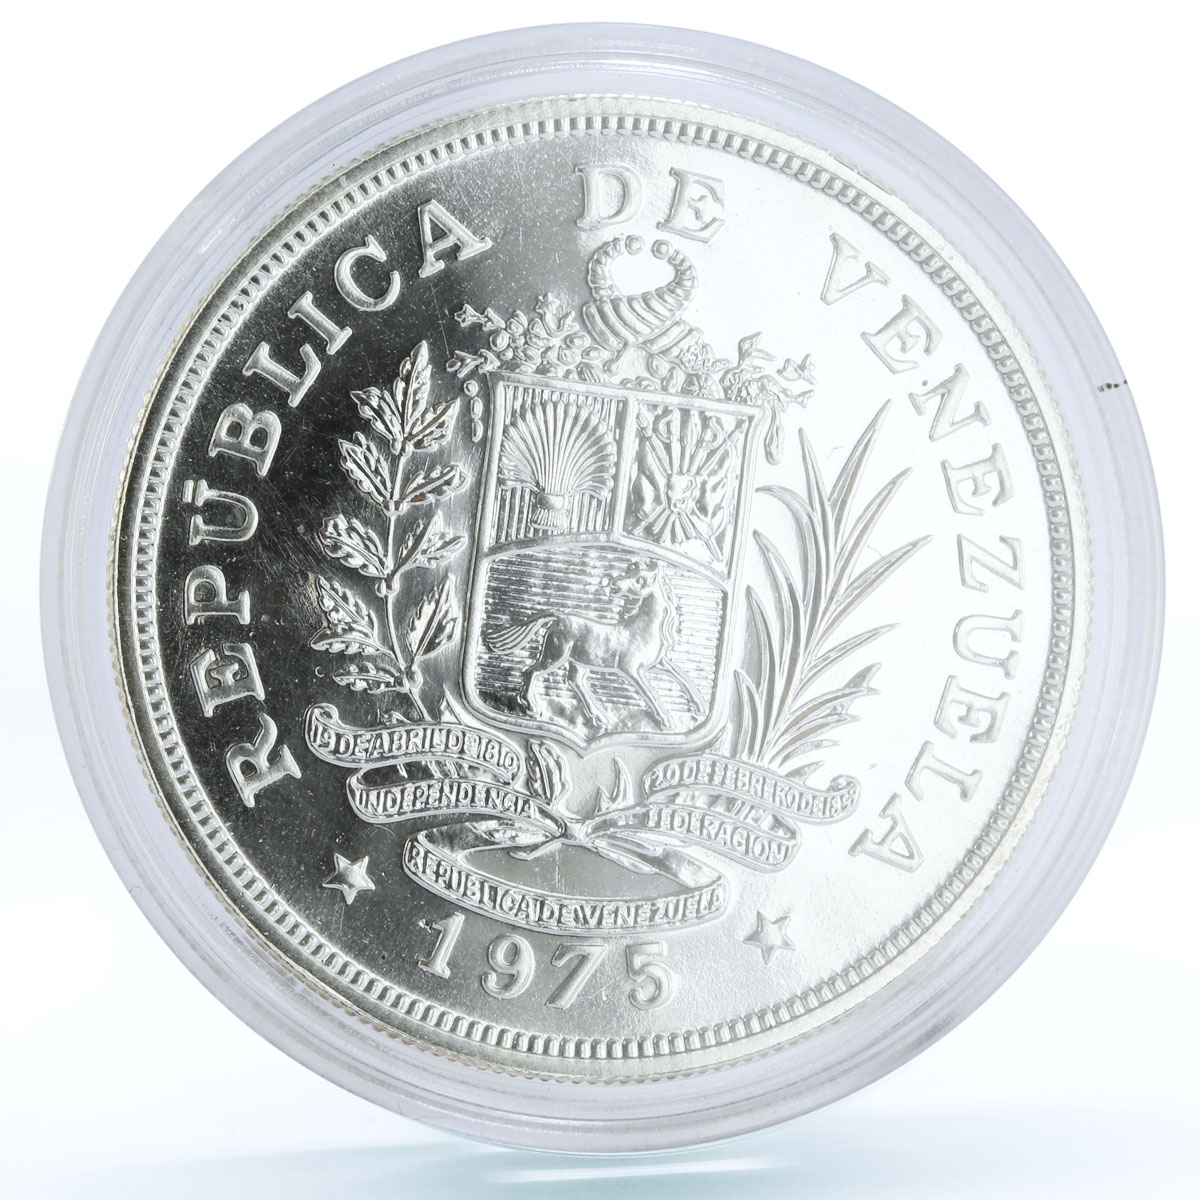 Venezuela 50 bolivares Endangered Wildlife Giant Armadillo silver coin 1975